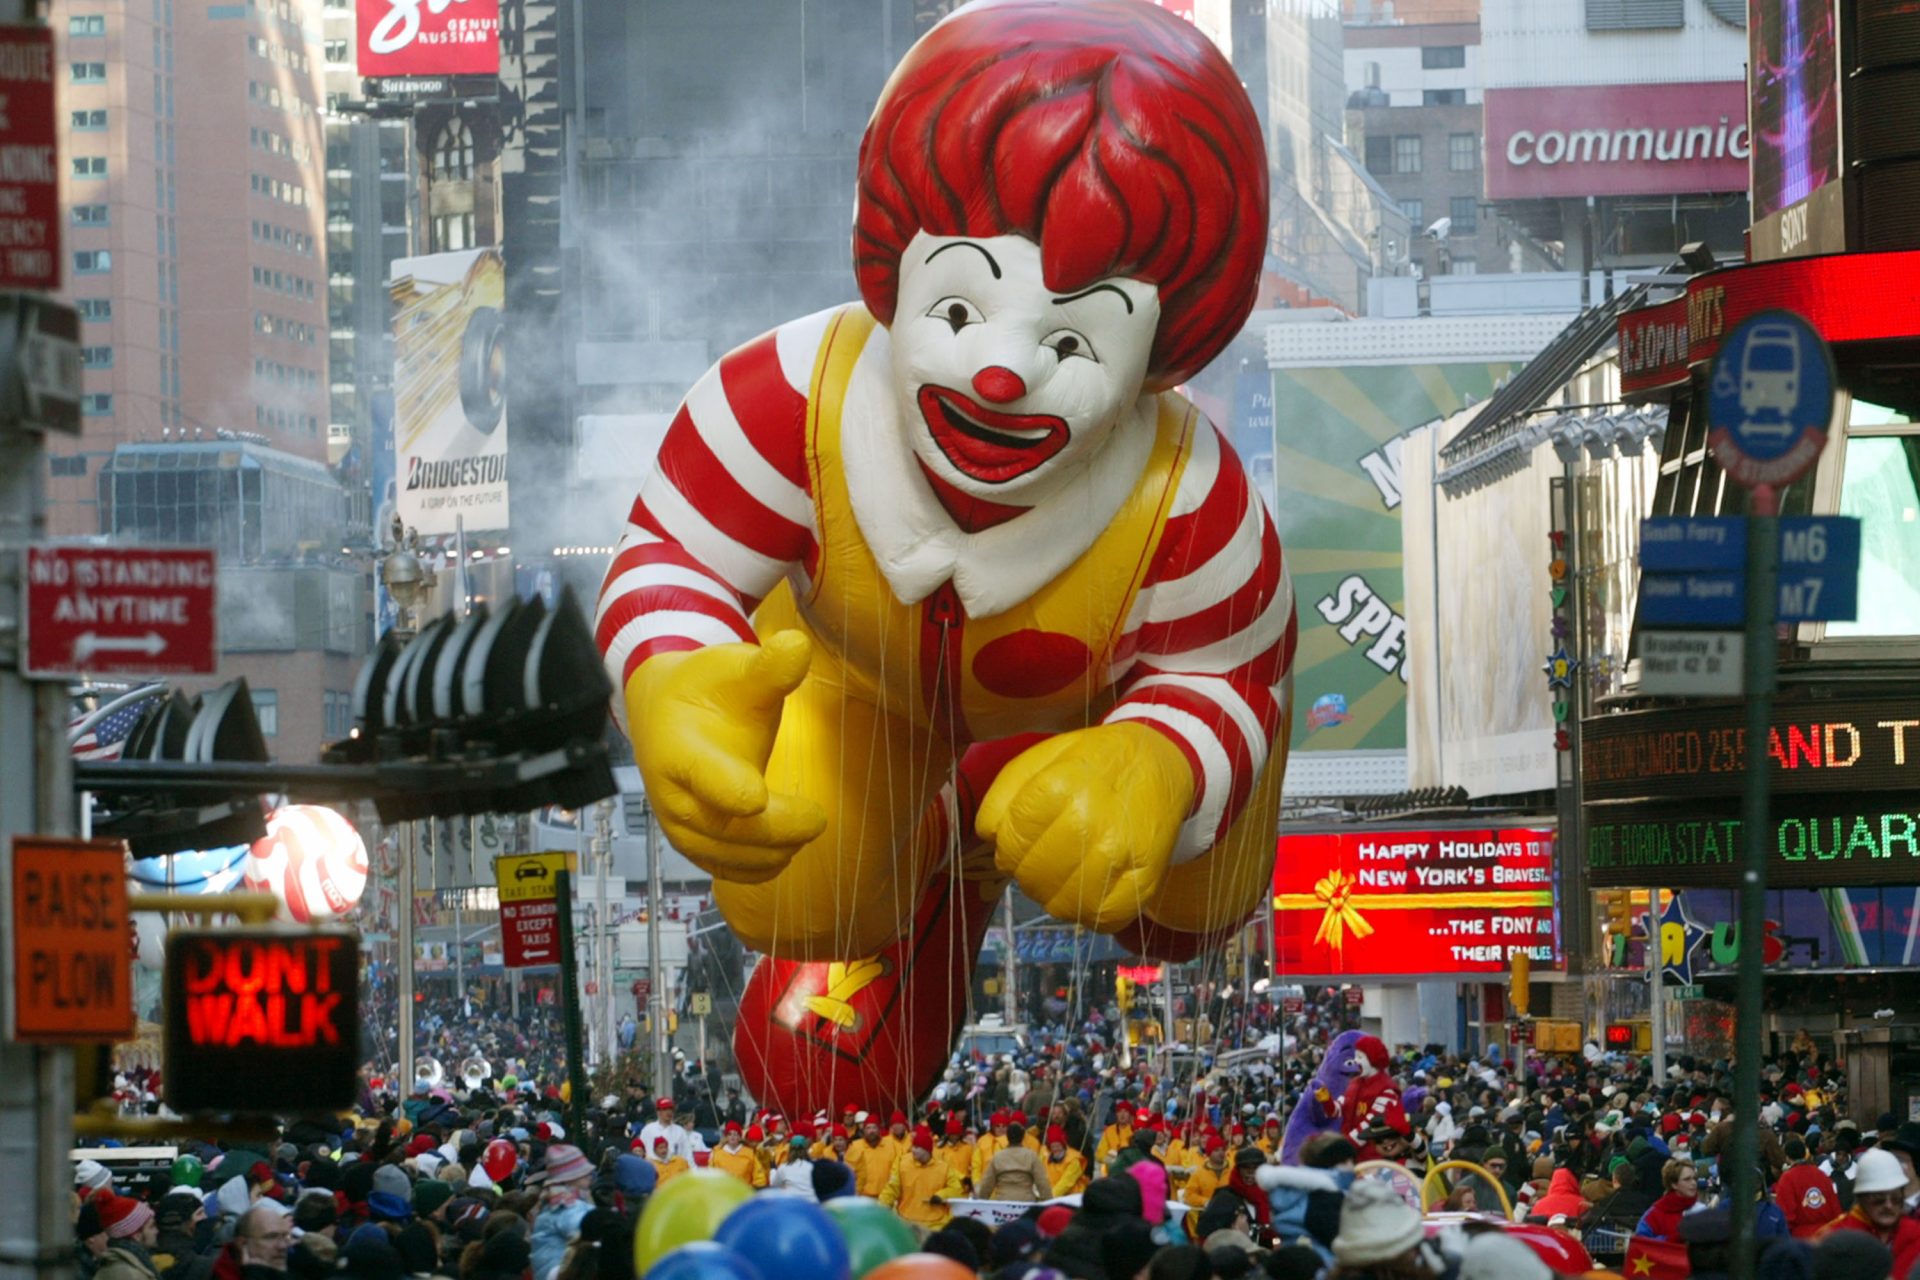 Ronald McDonald, not creepy at all…